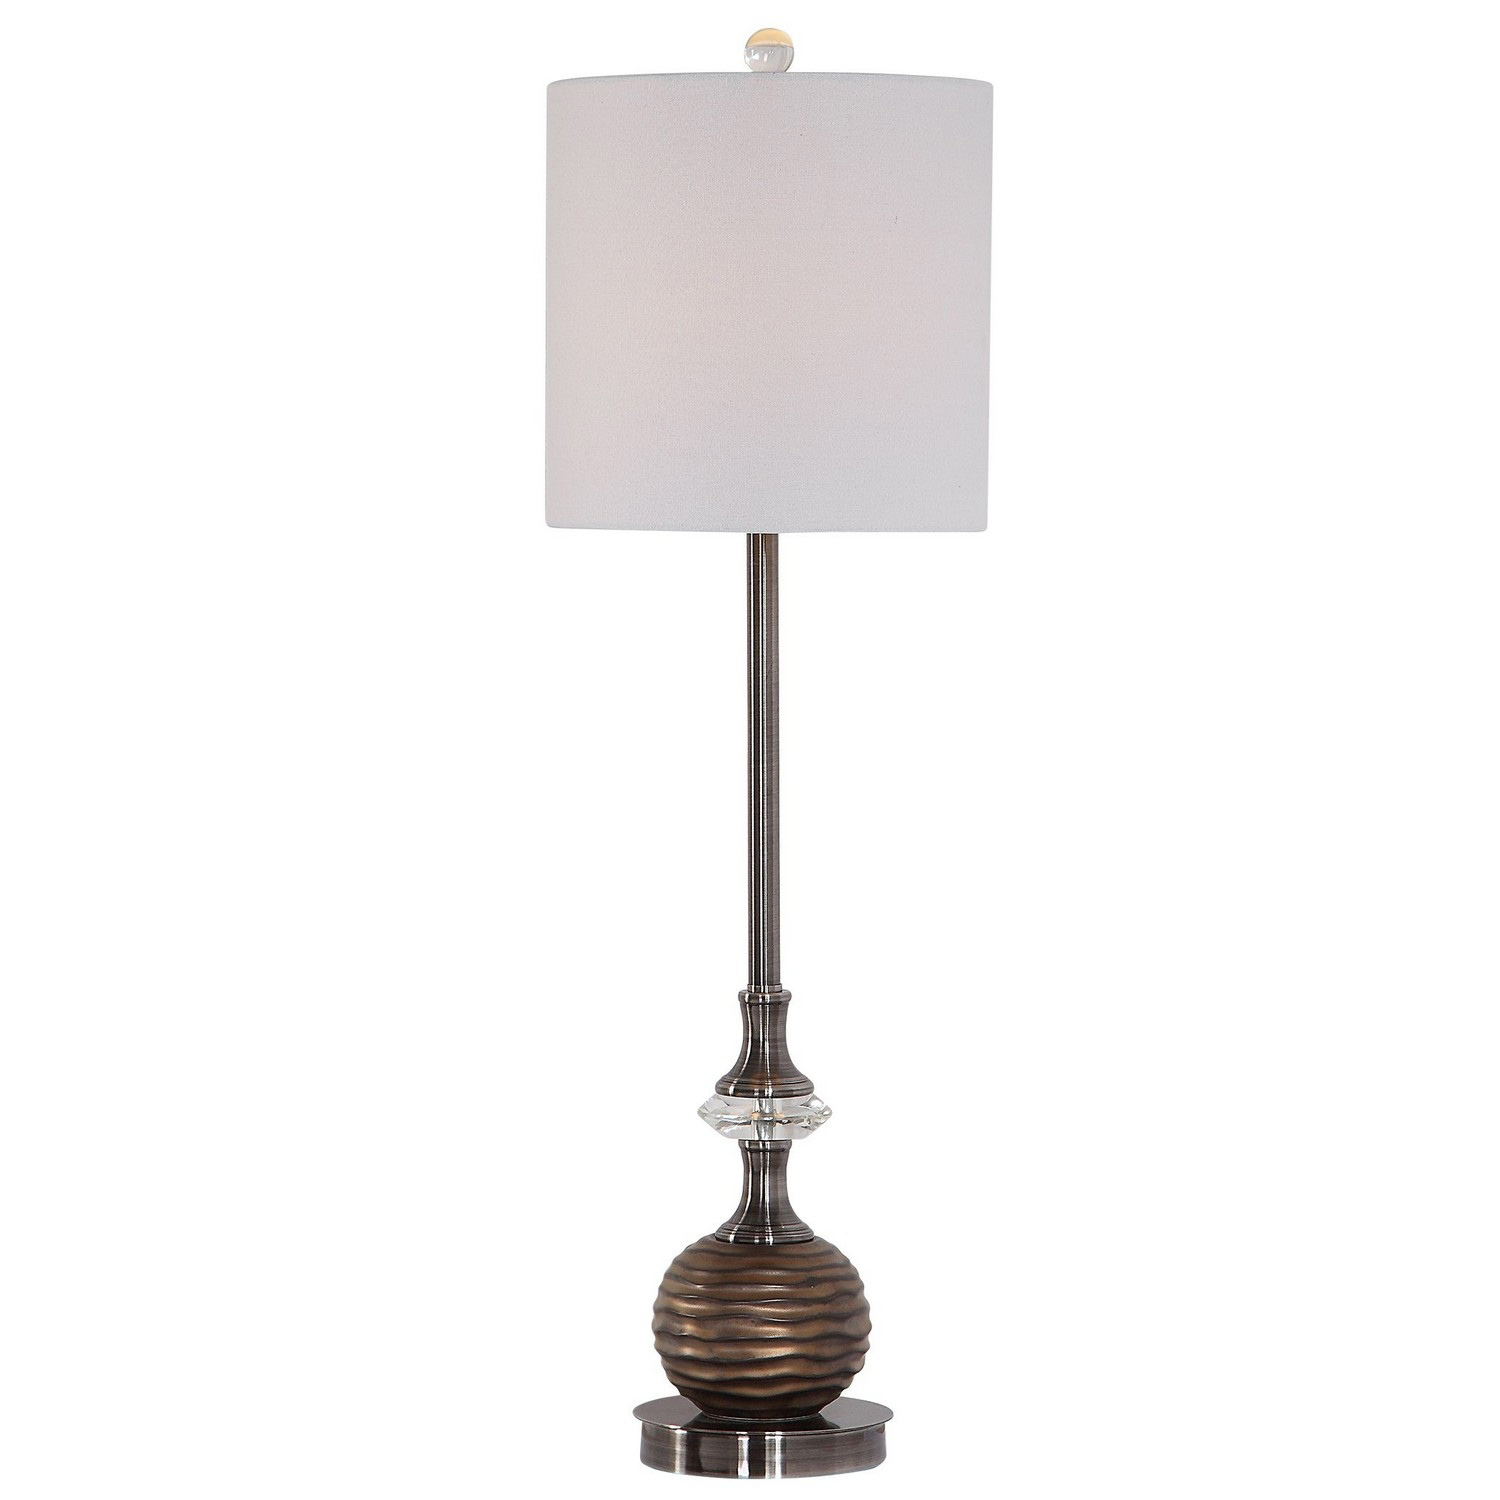 ABC Accent ABC-26037-1 Table Lamp - Bronze